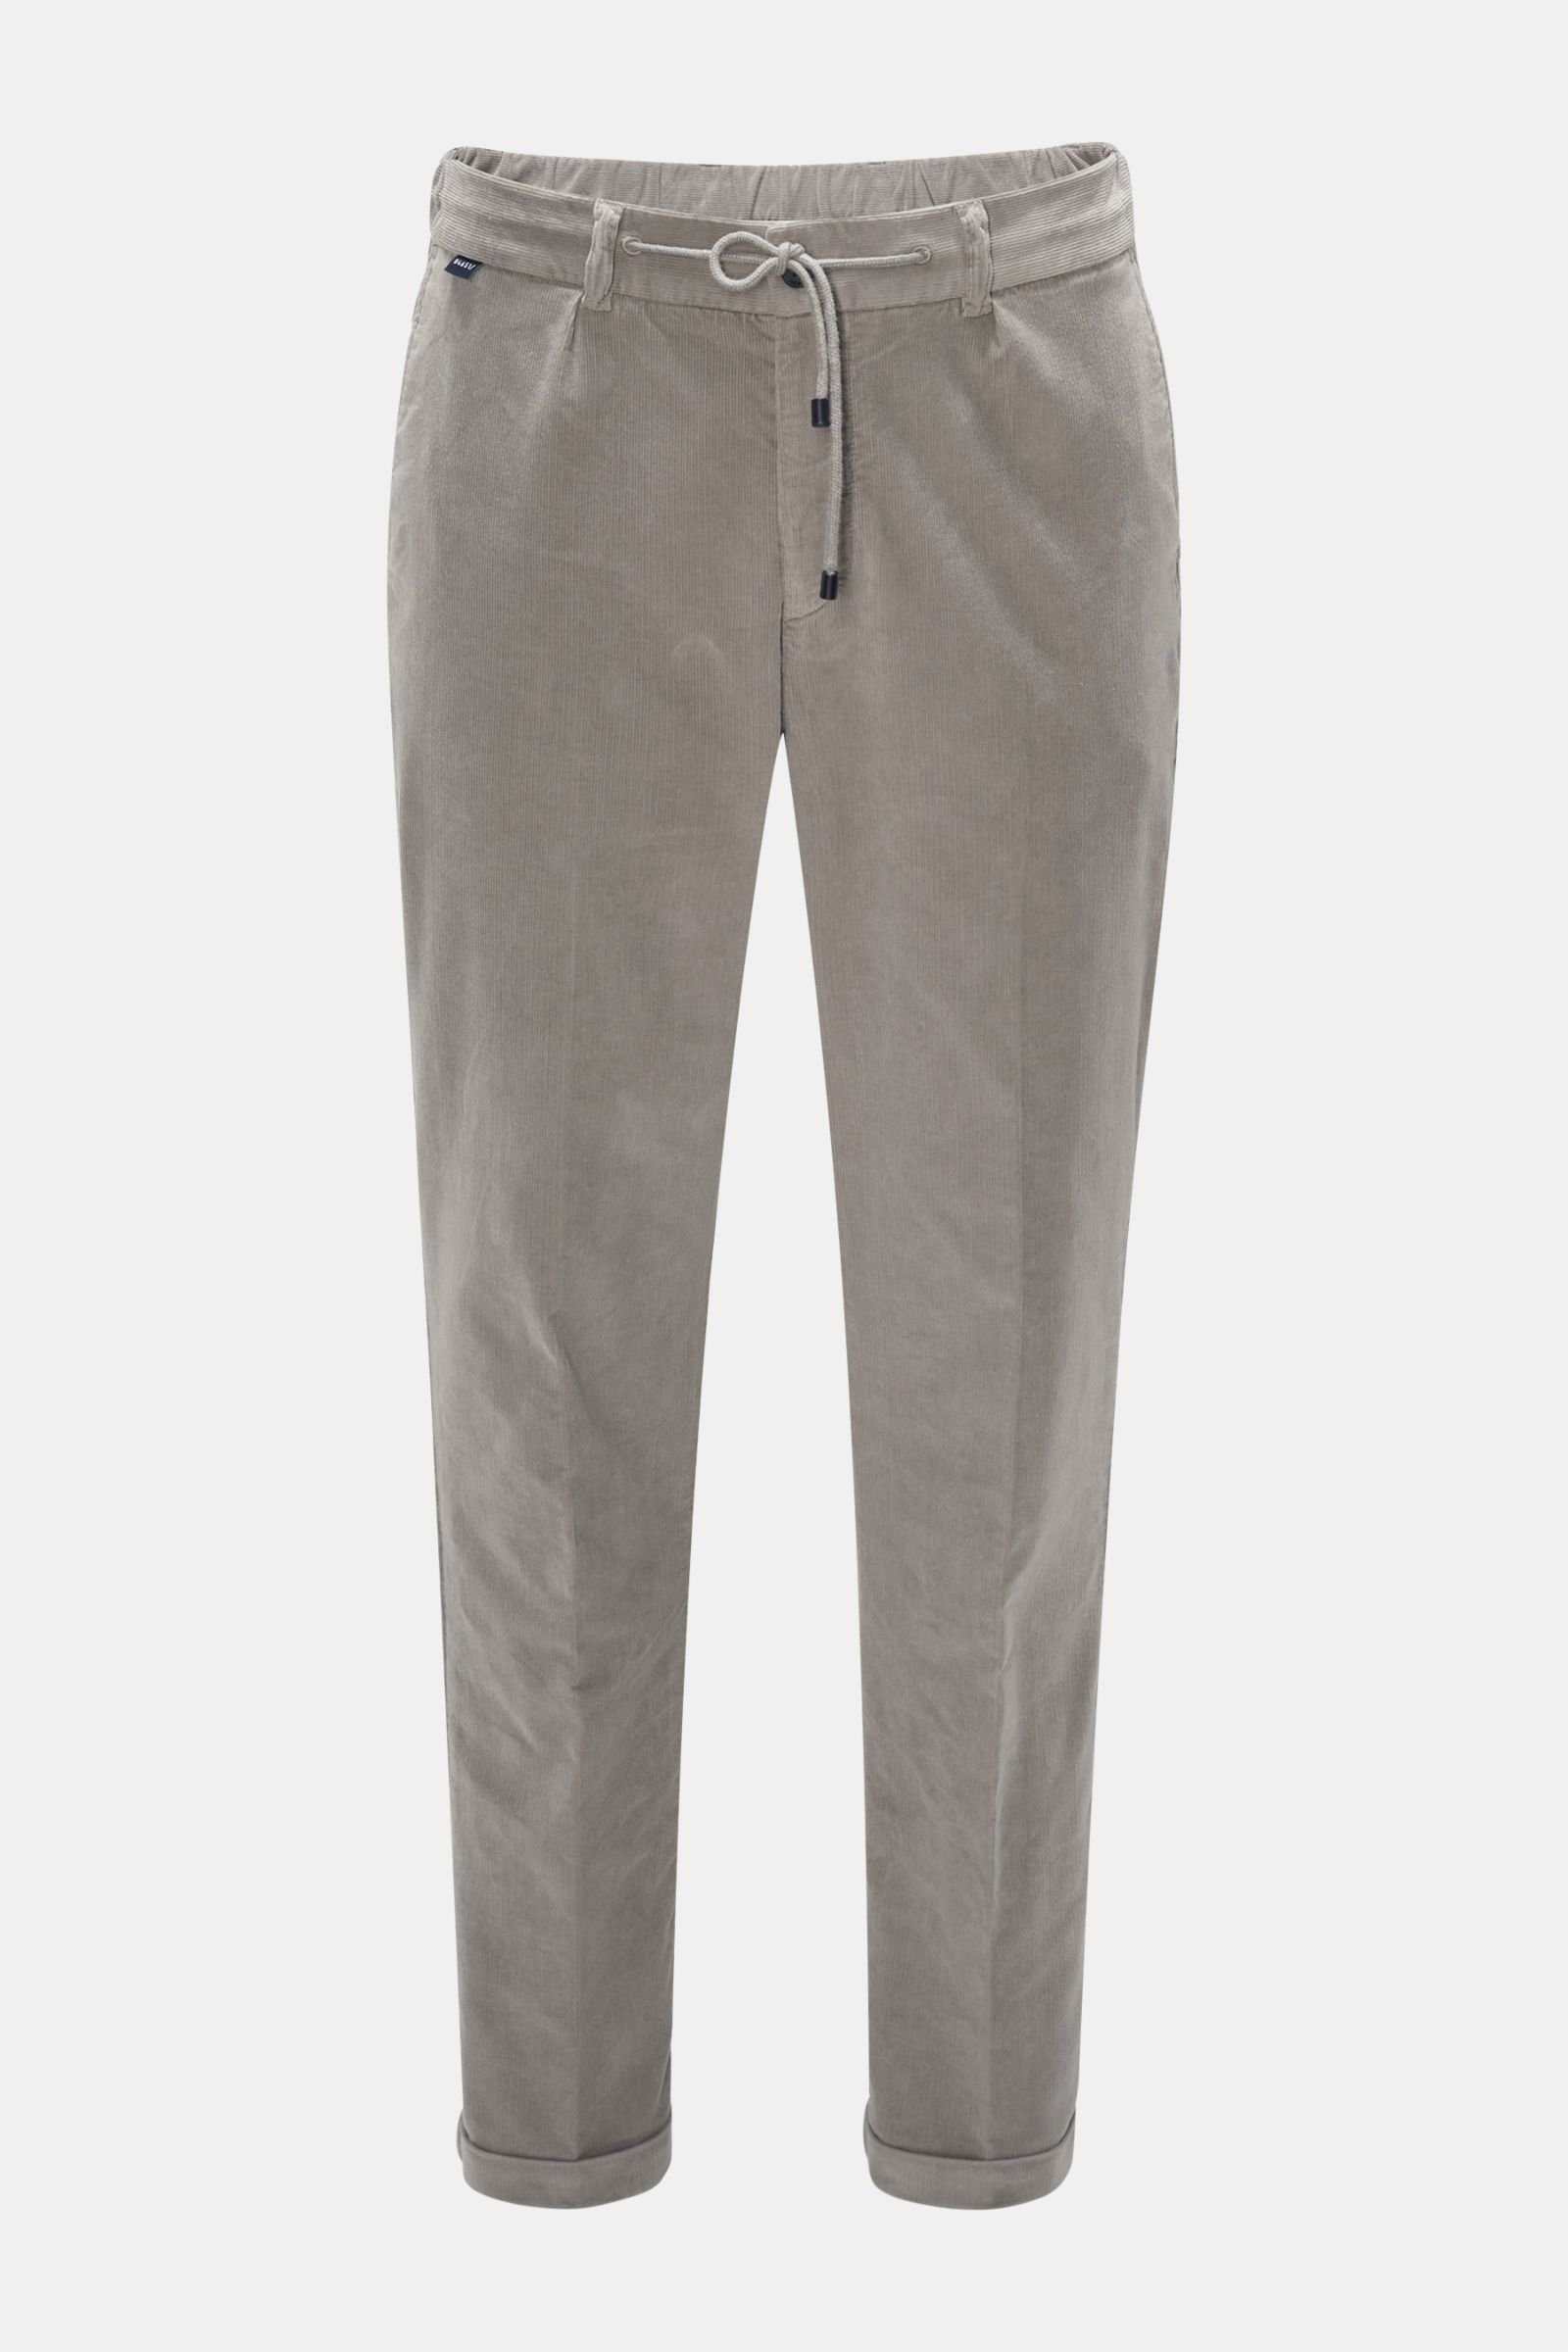 Corduroy jogger pants grey-brown